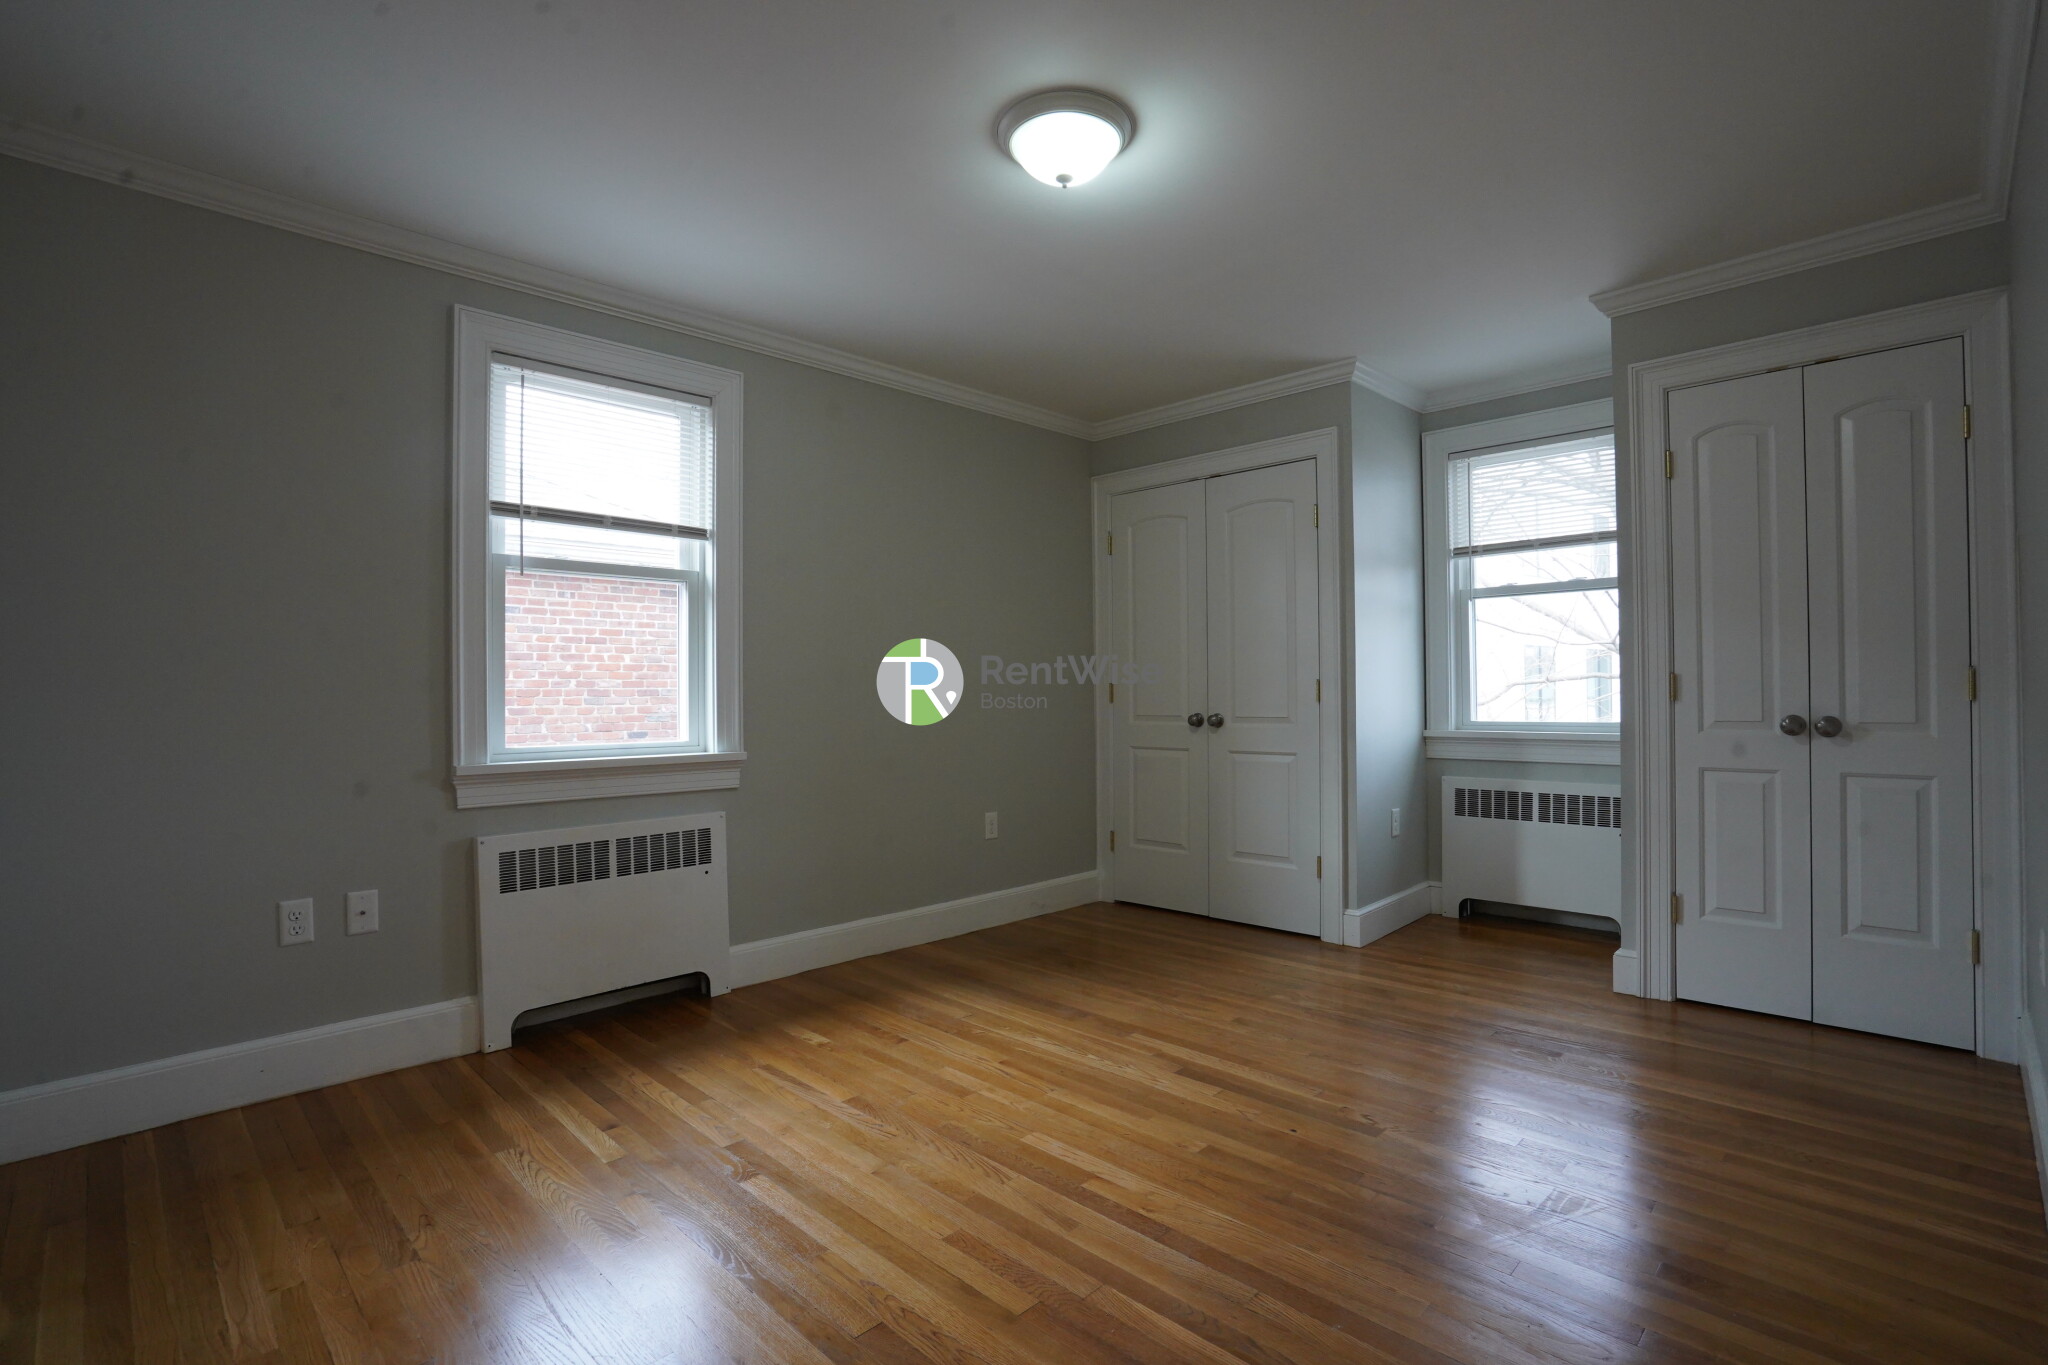 Photos of apartment on Shanley St.,Boston MA 02135